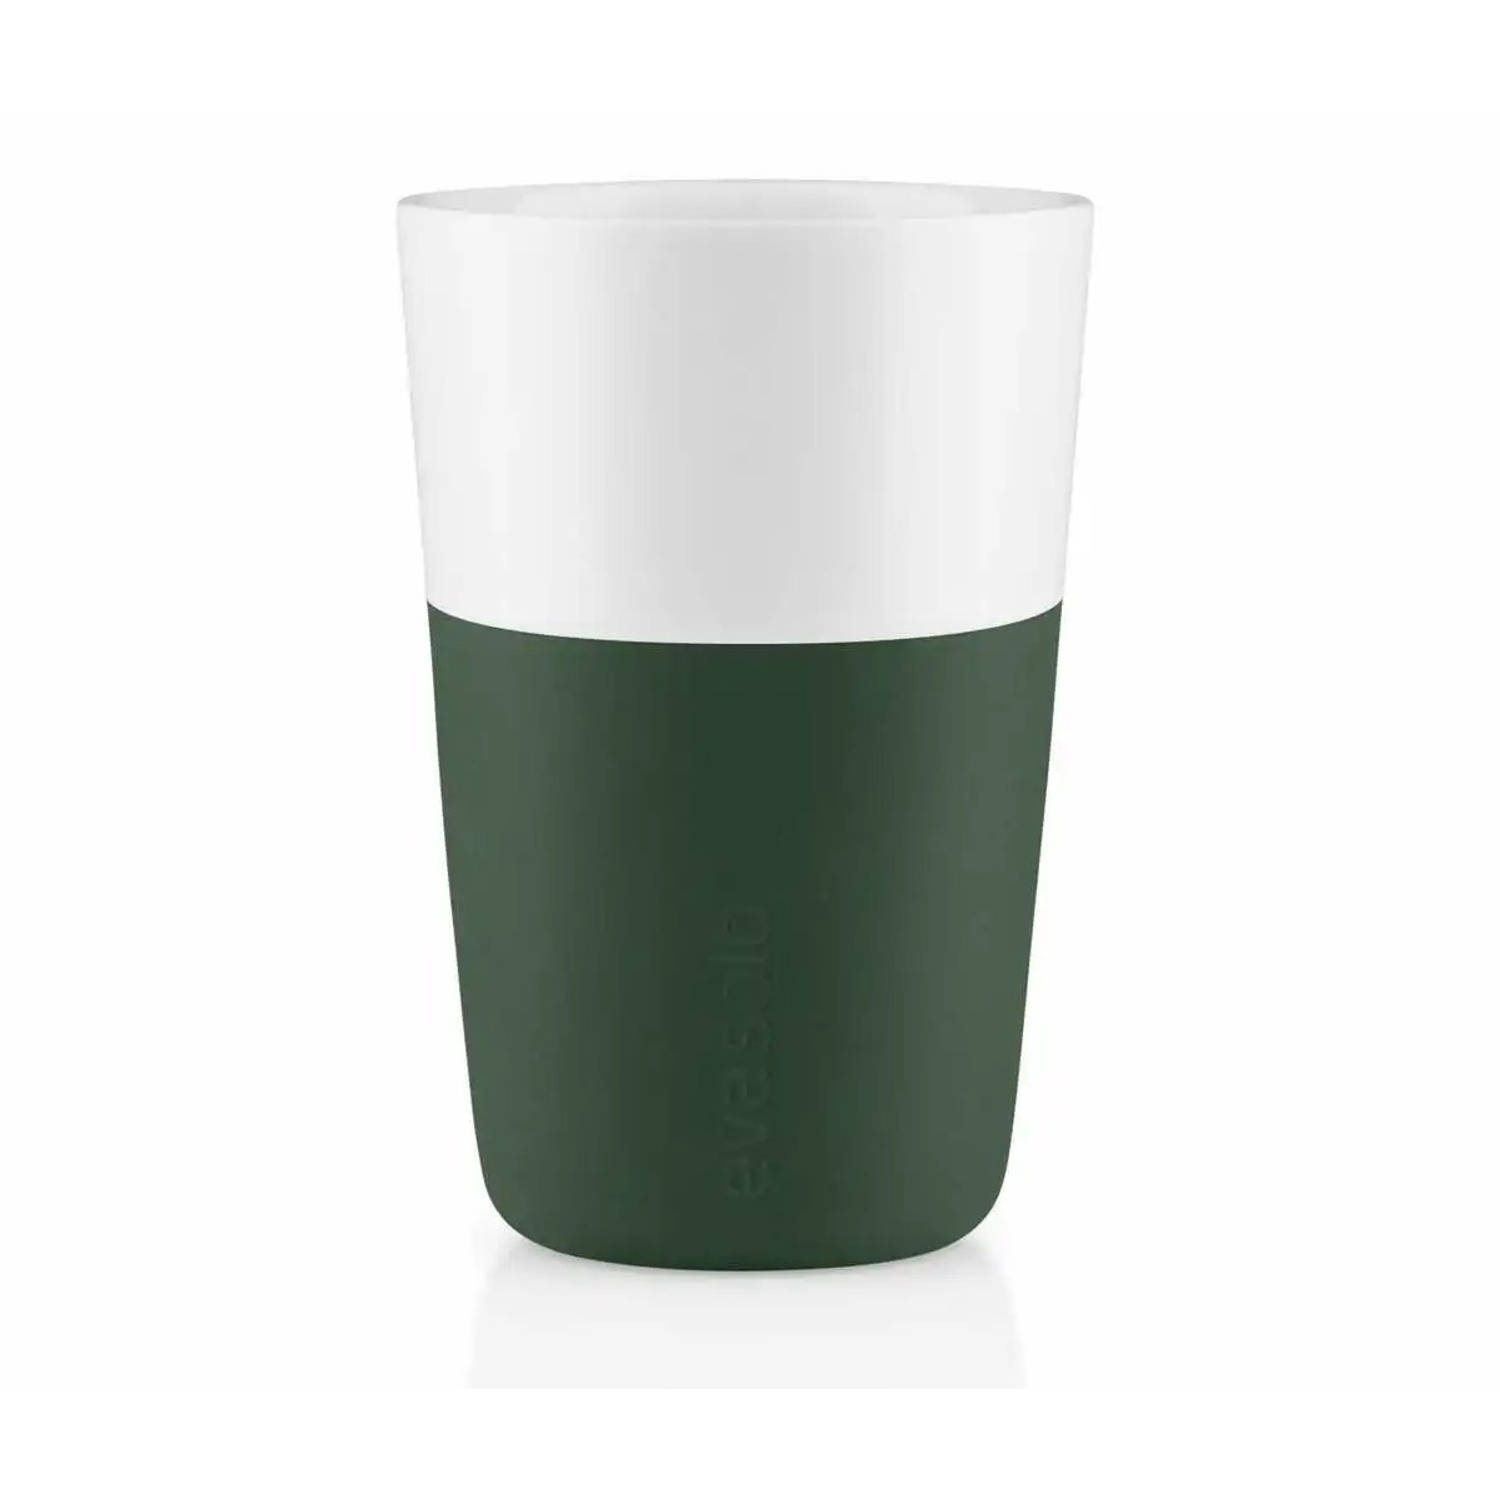 Eva Solo - Latte Kop, Mok, Set van 2 Stuks, 360 ml, Emerald Groen - Eva Solo